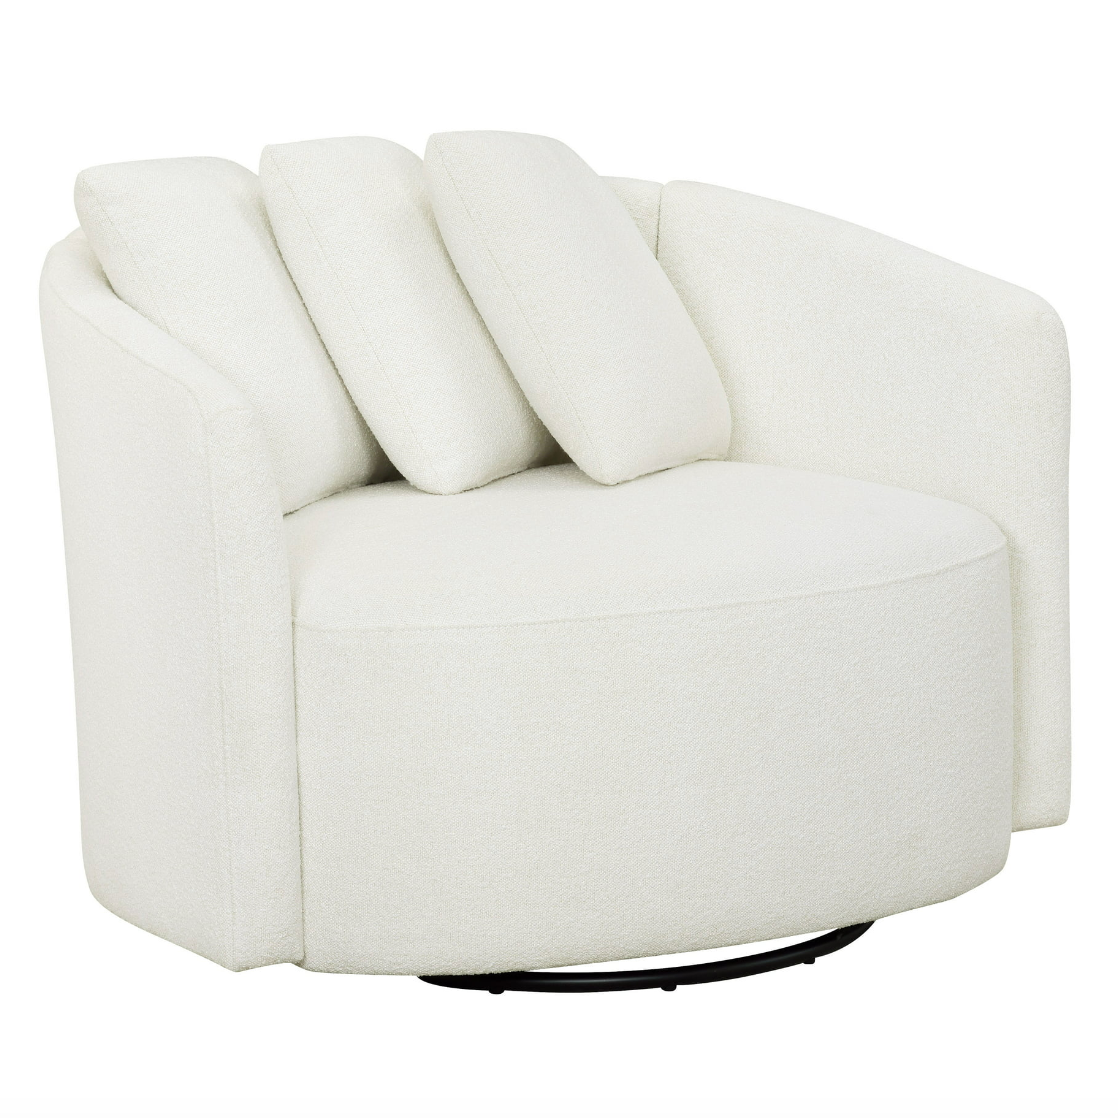 White boucle swivel chair